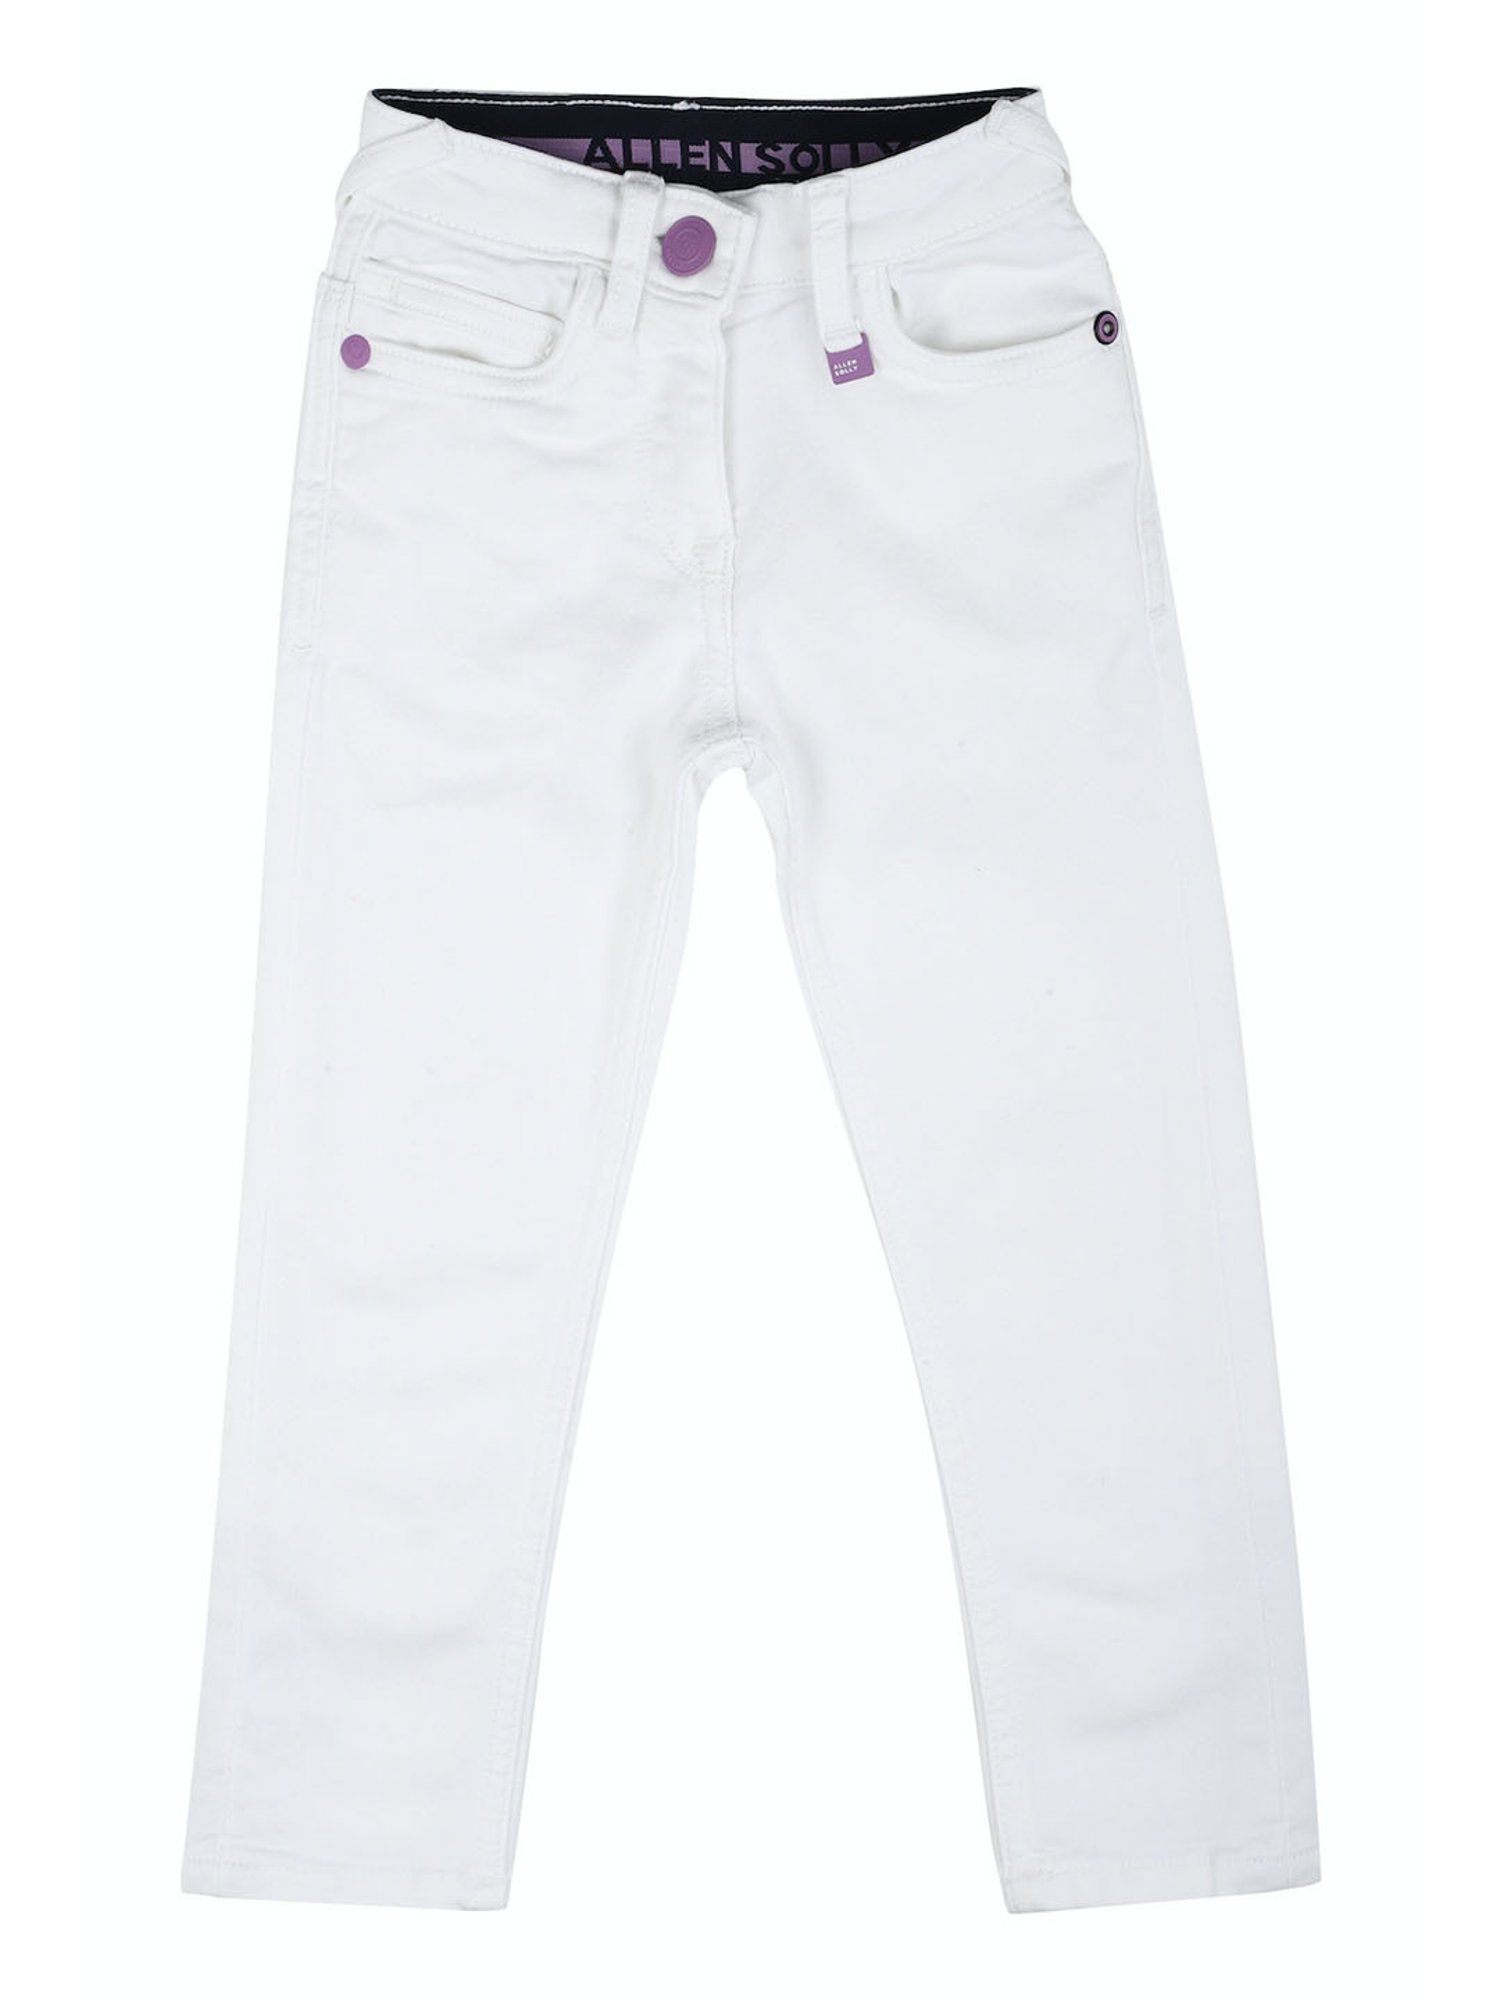 Our Comfy & Stylish Boys Linen Pants | Boys linen pants, Mens linen pants,  Linen pants